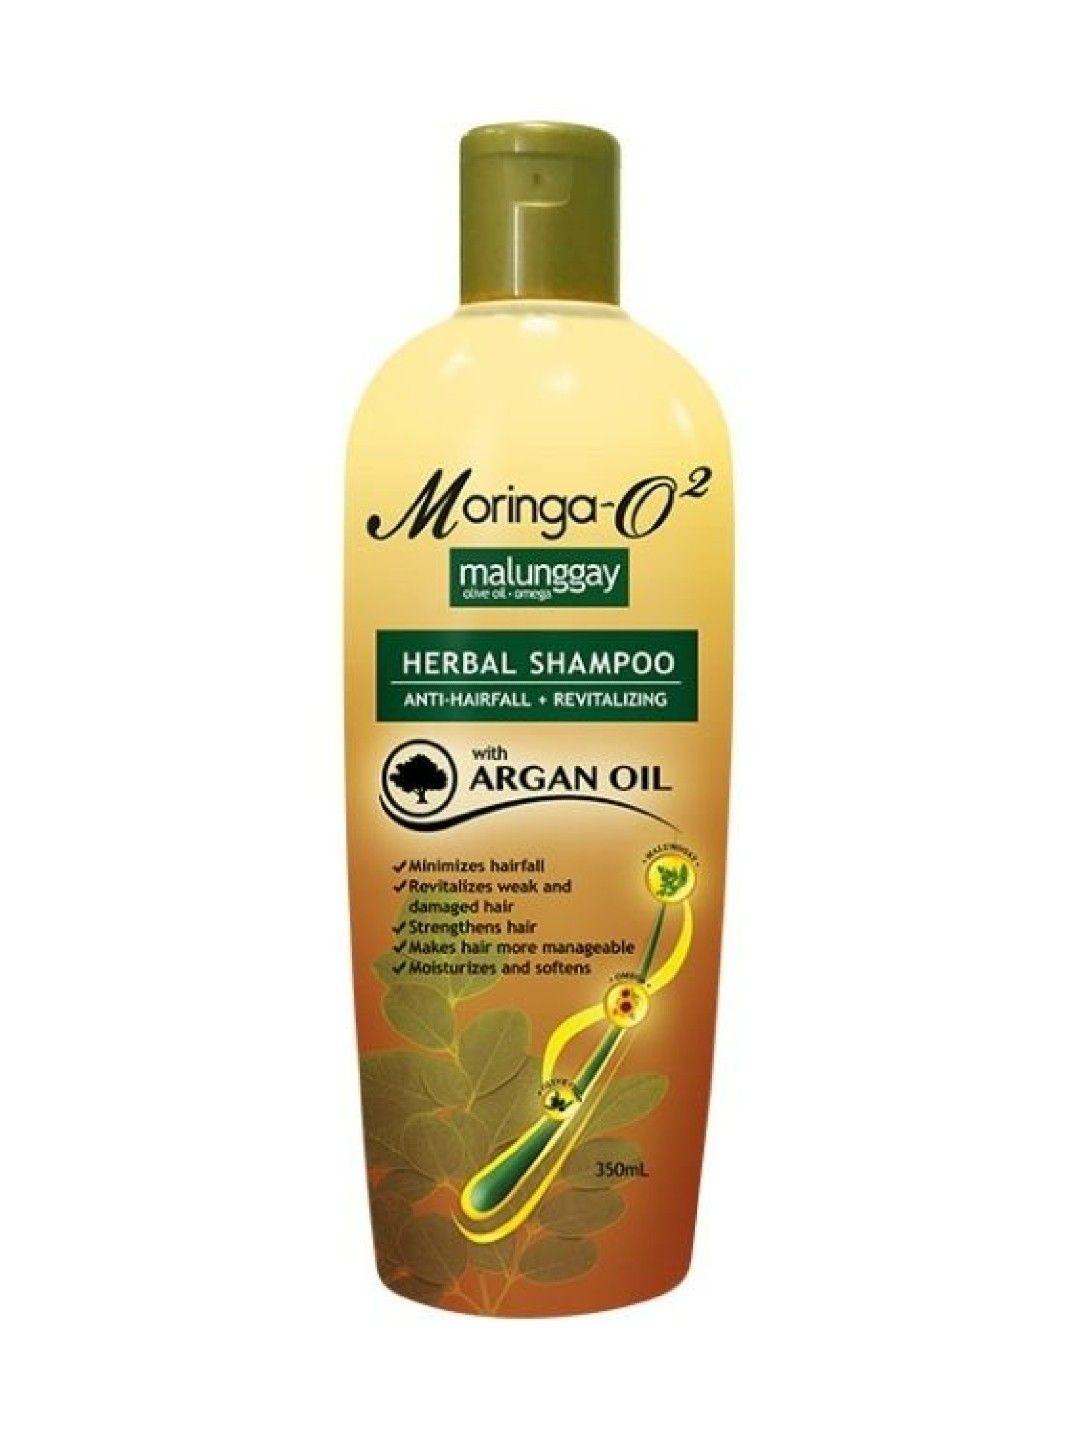 Moringa-O2 Anti-Hairfall Shampoo with Argan Oil (350ml)